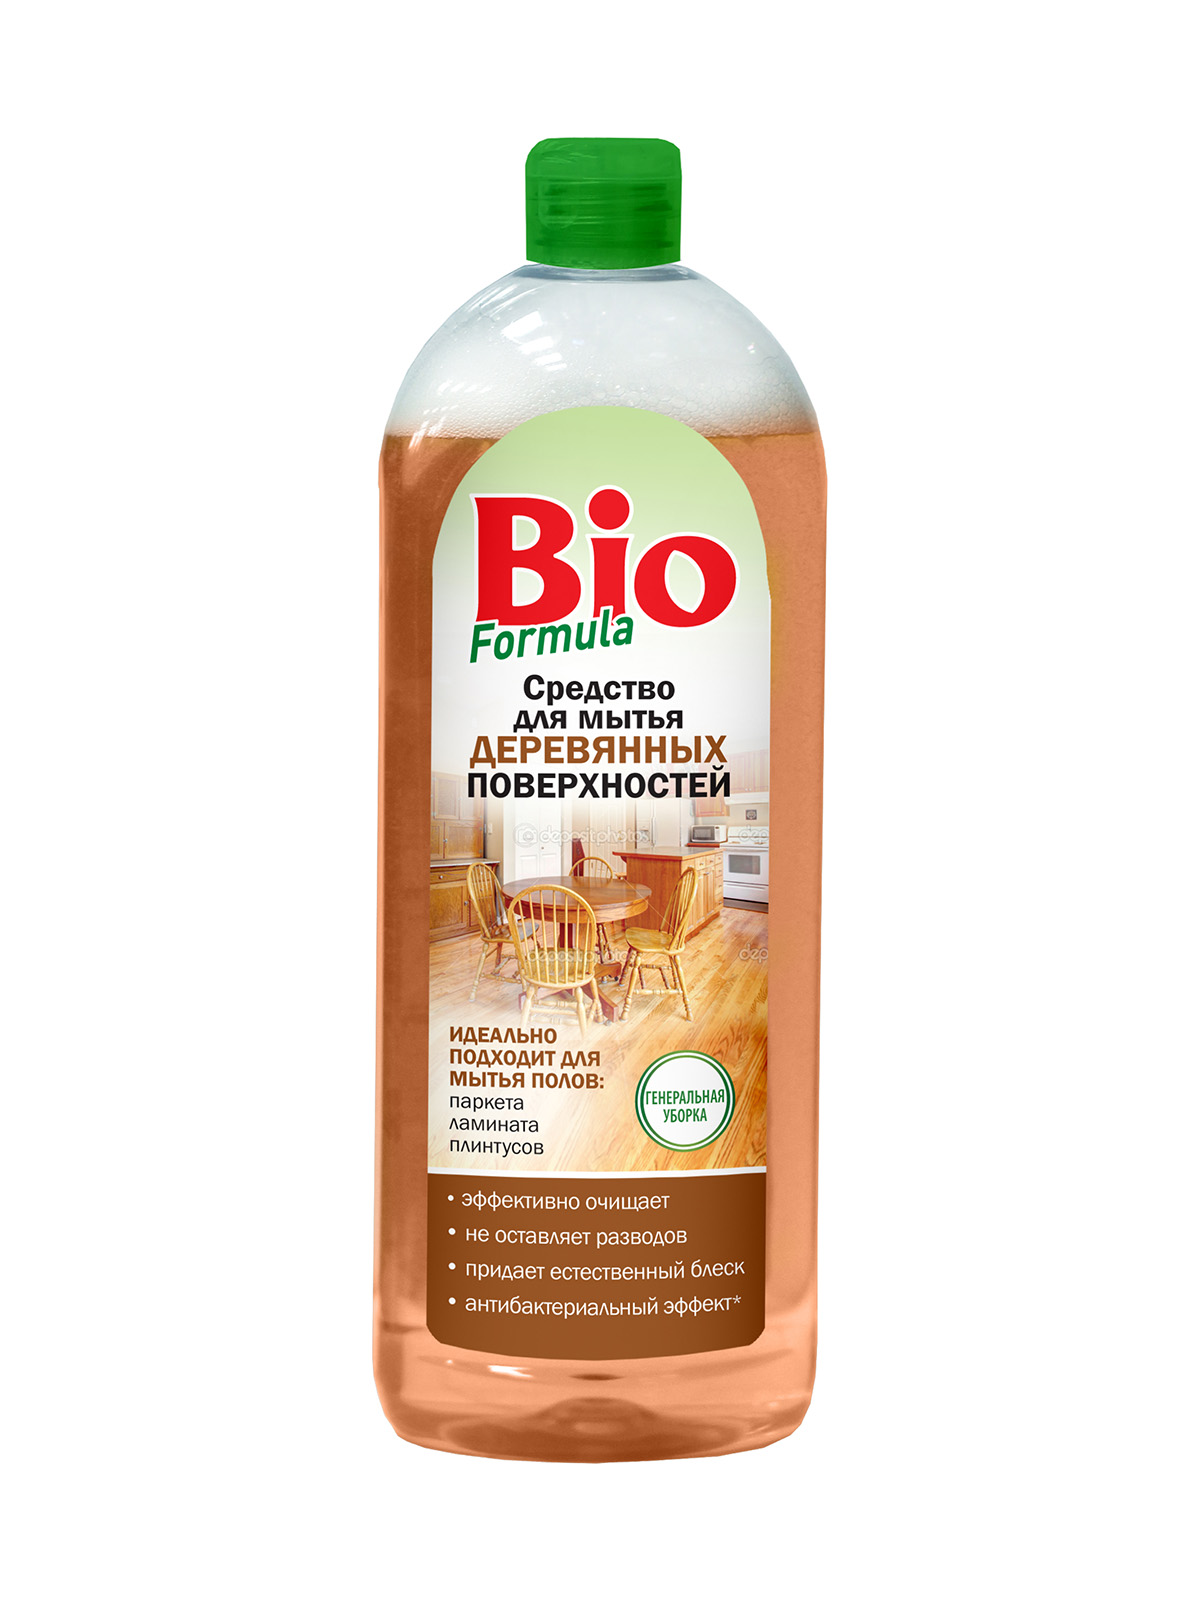 Bio Formula средство для мытья полов. Средство для мытья деревянного потолка. Fiore Bio средство для пола.